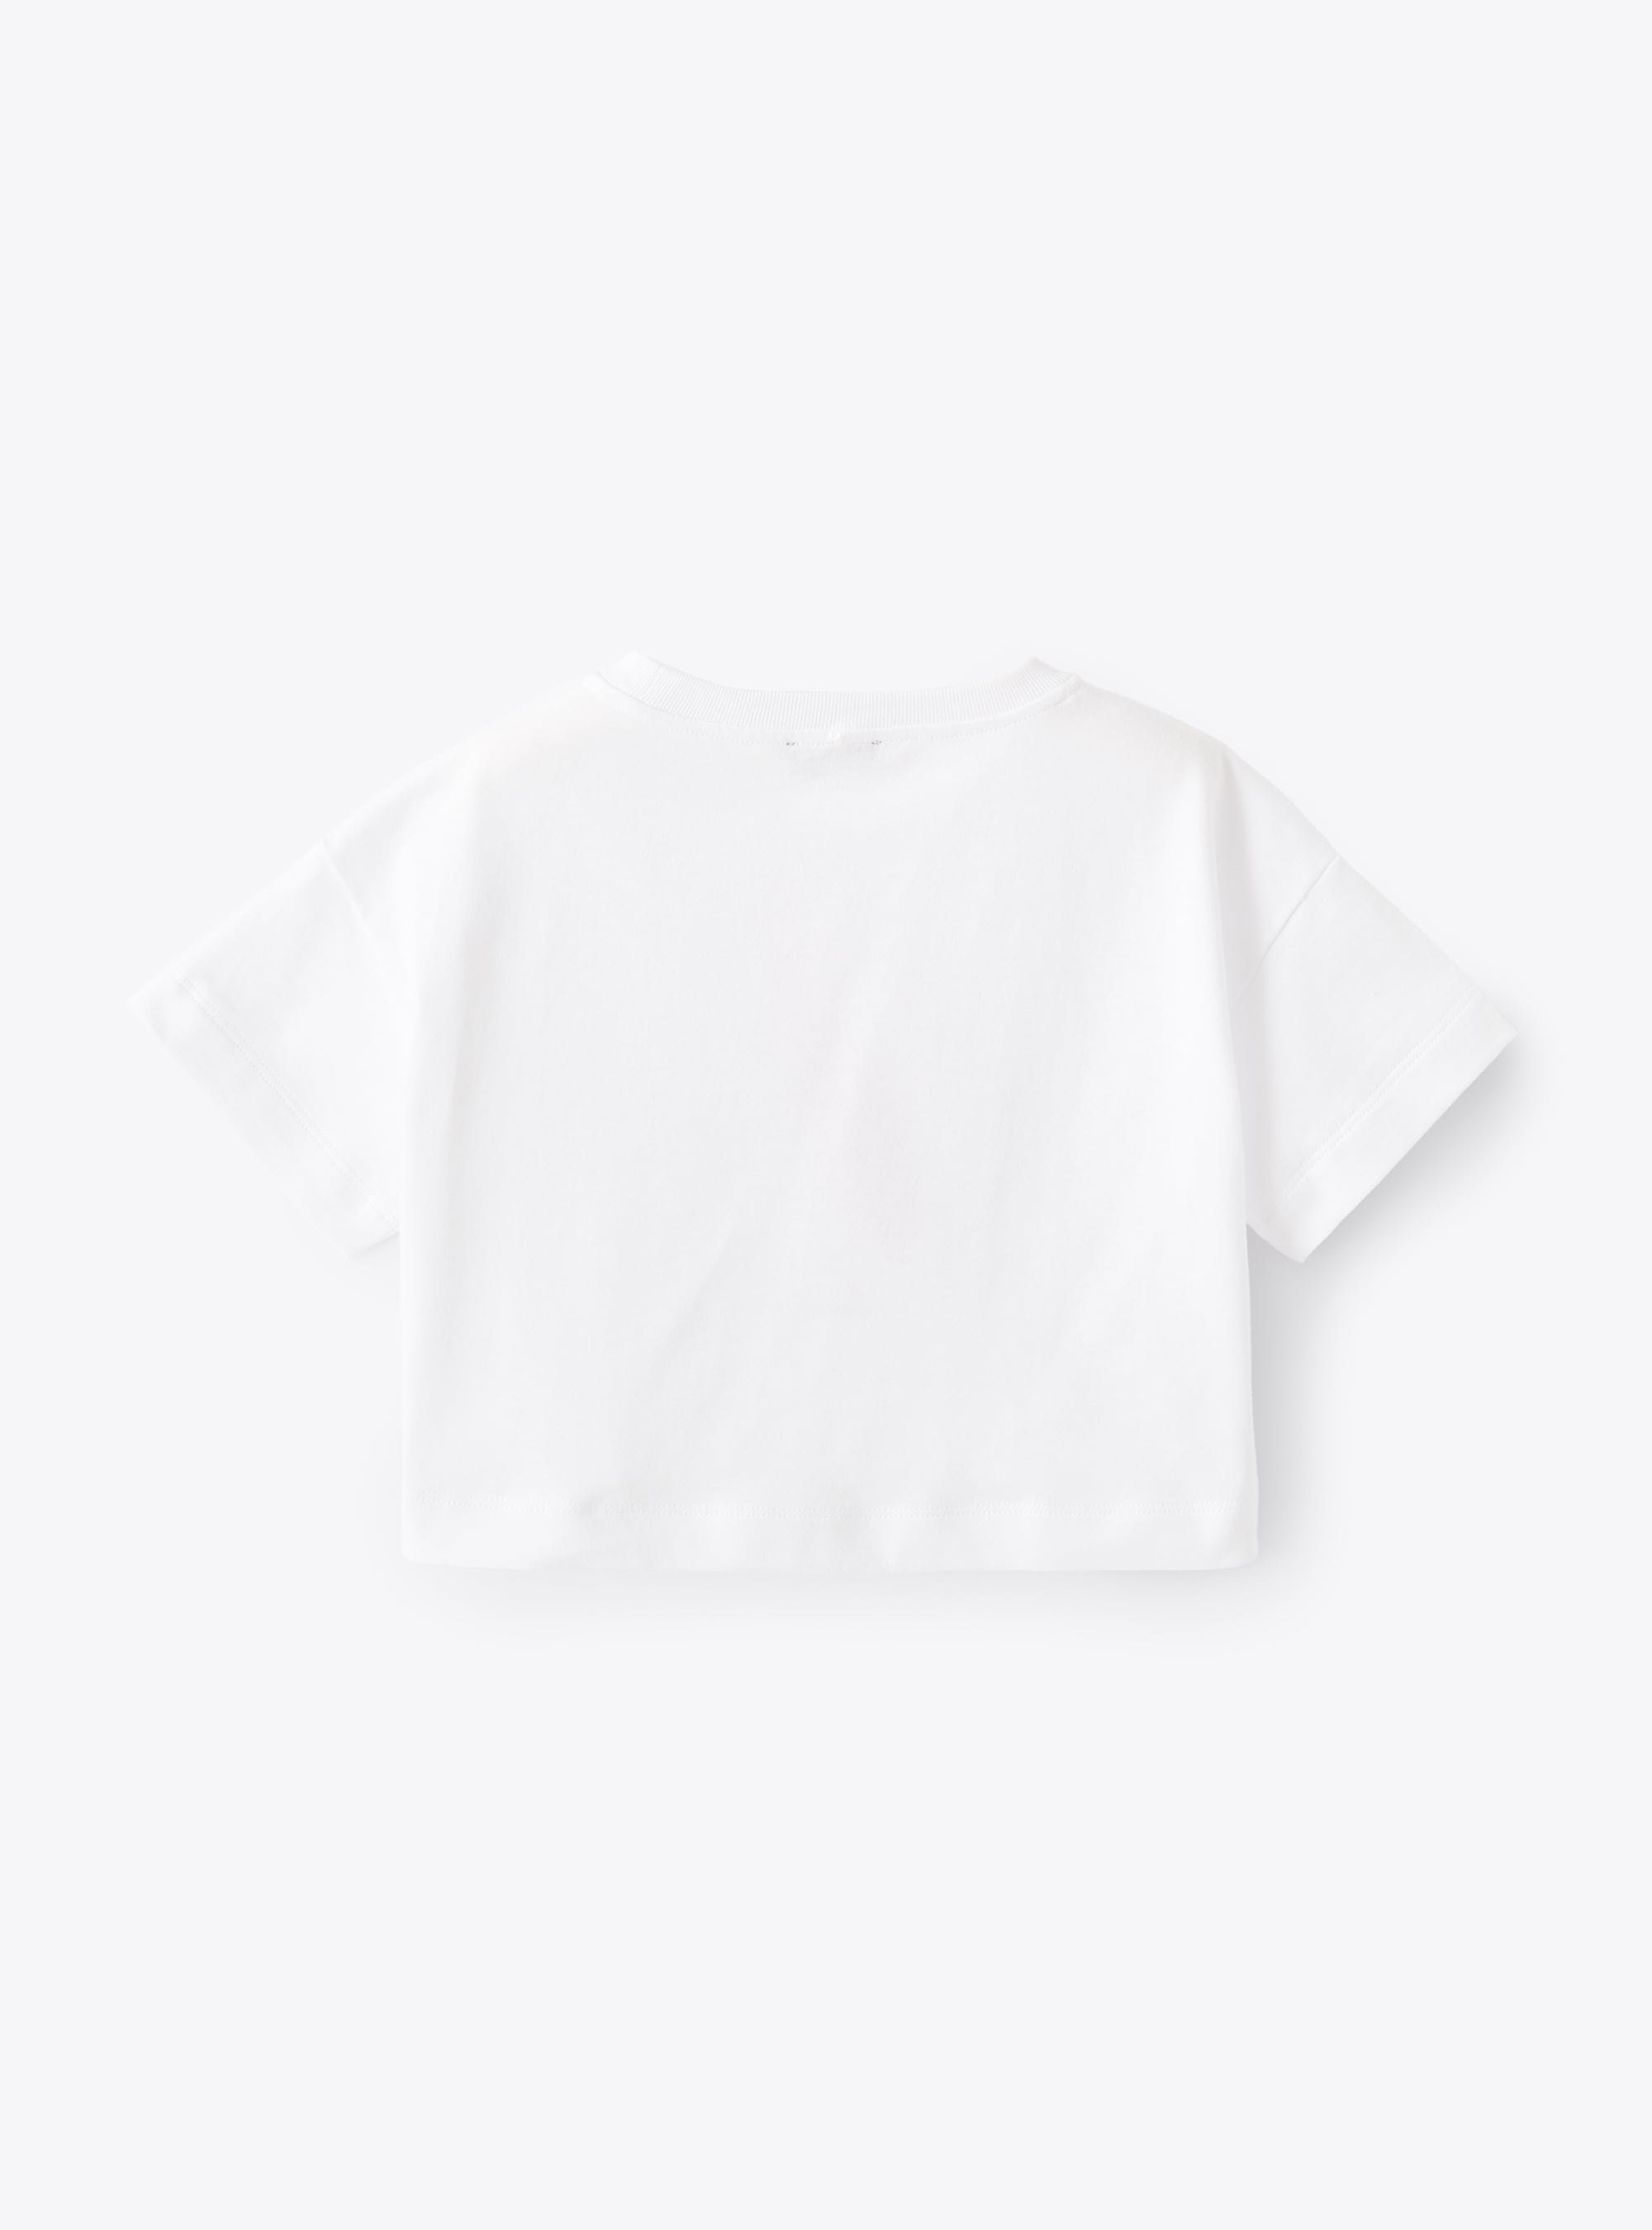 White t-shirt with flamingo print - White | Il Gufo